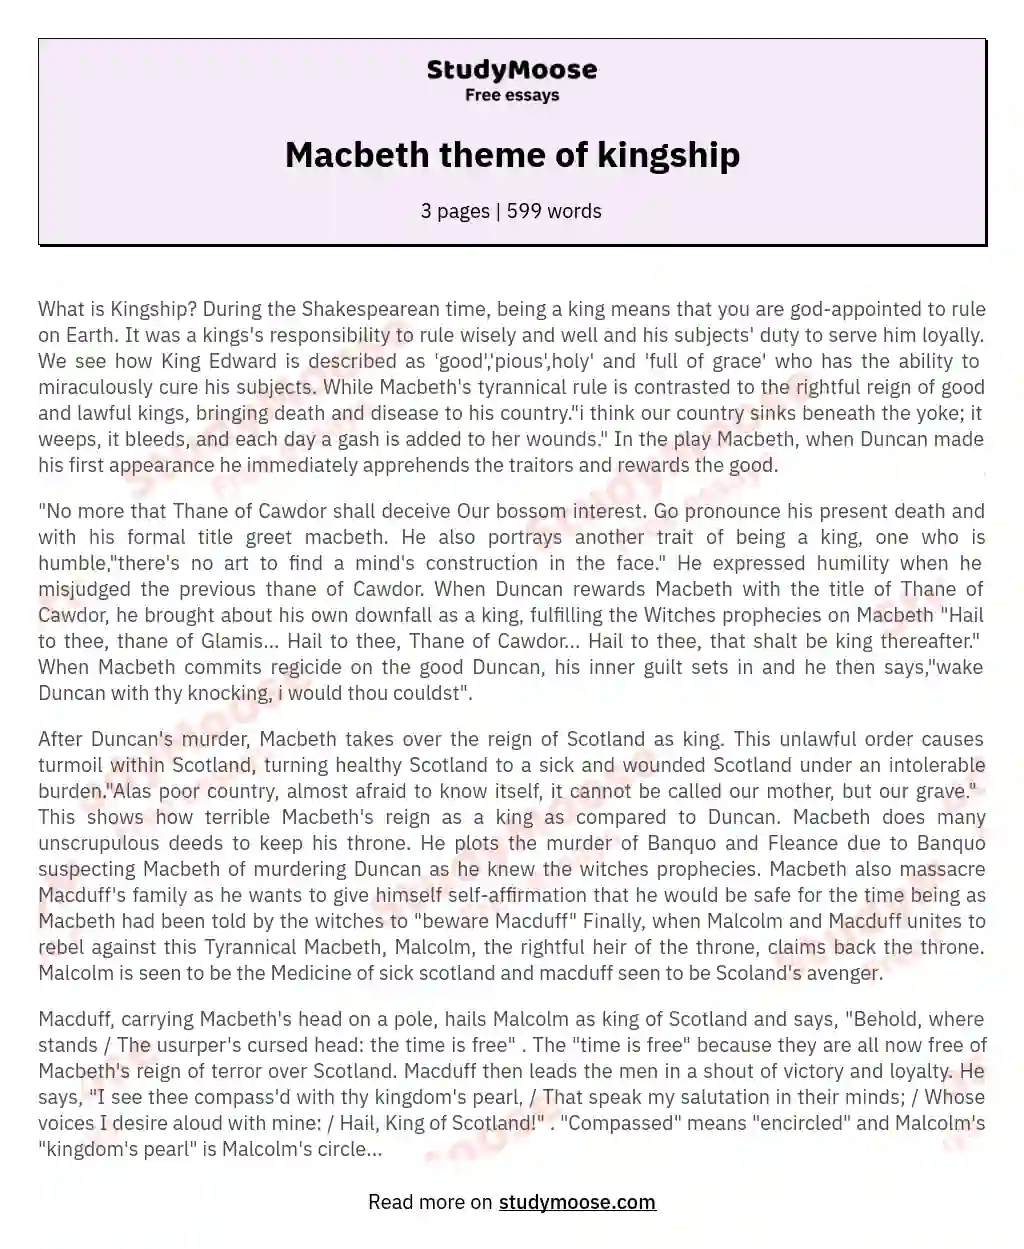 Macbeth theme of kingship essay